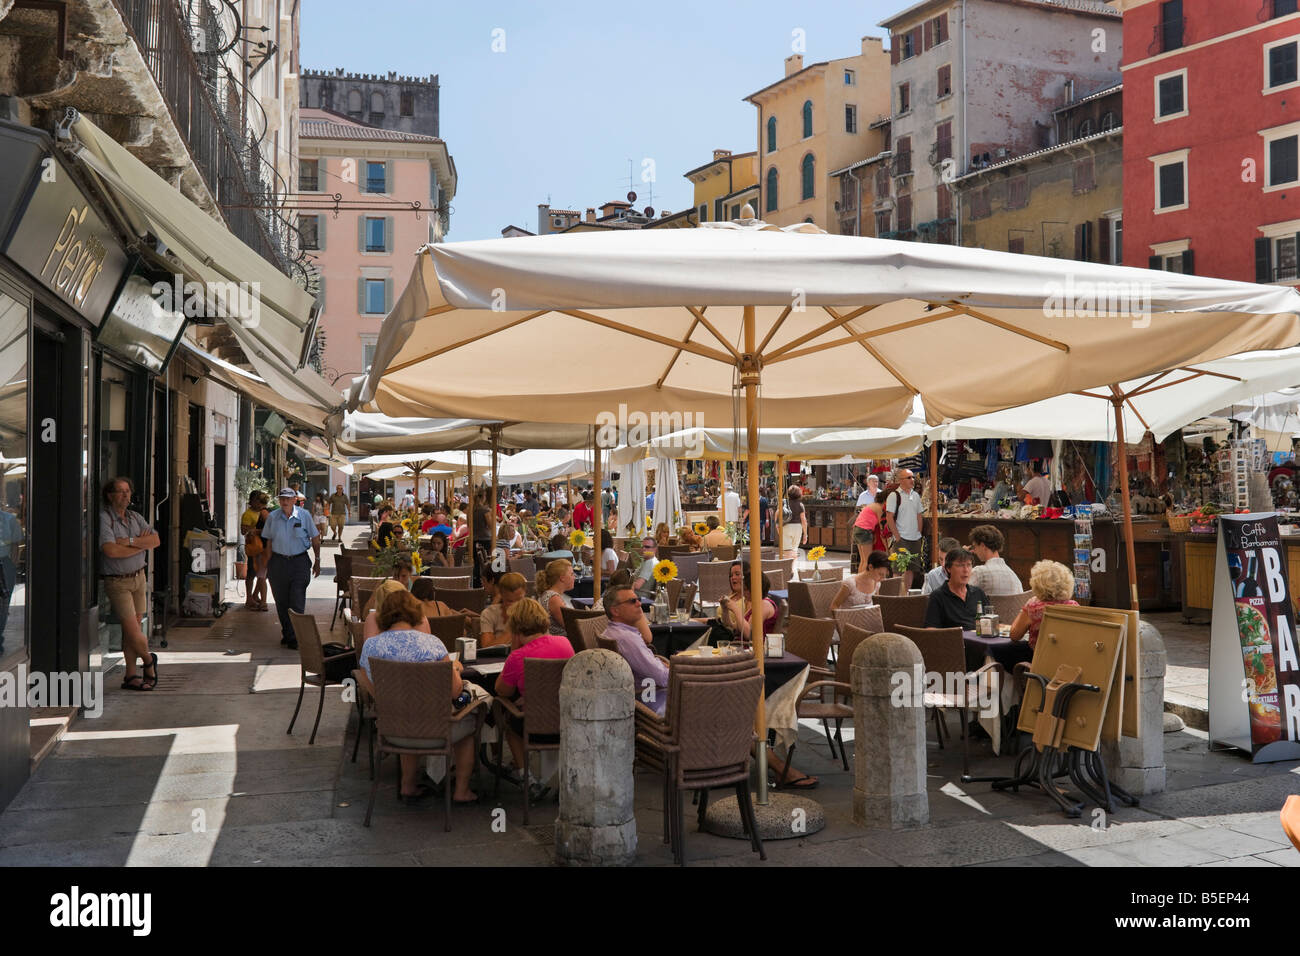 Street cafe with market stalls behind, Piazza delle Erbe, Verona, Veneto, Italy Stock Photo